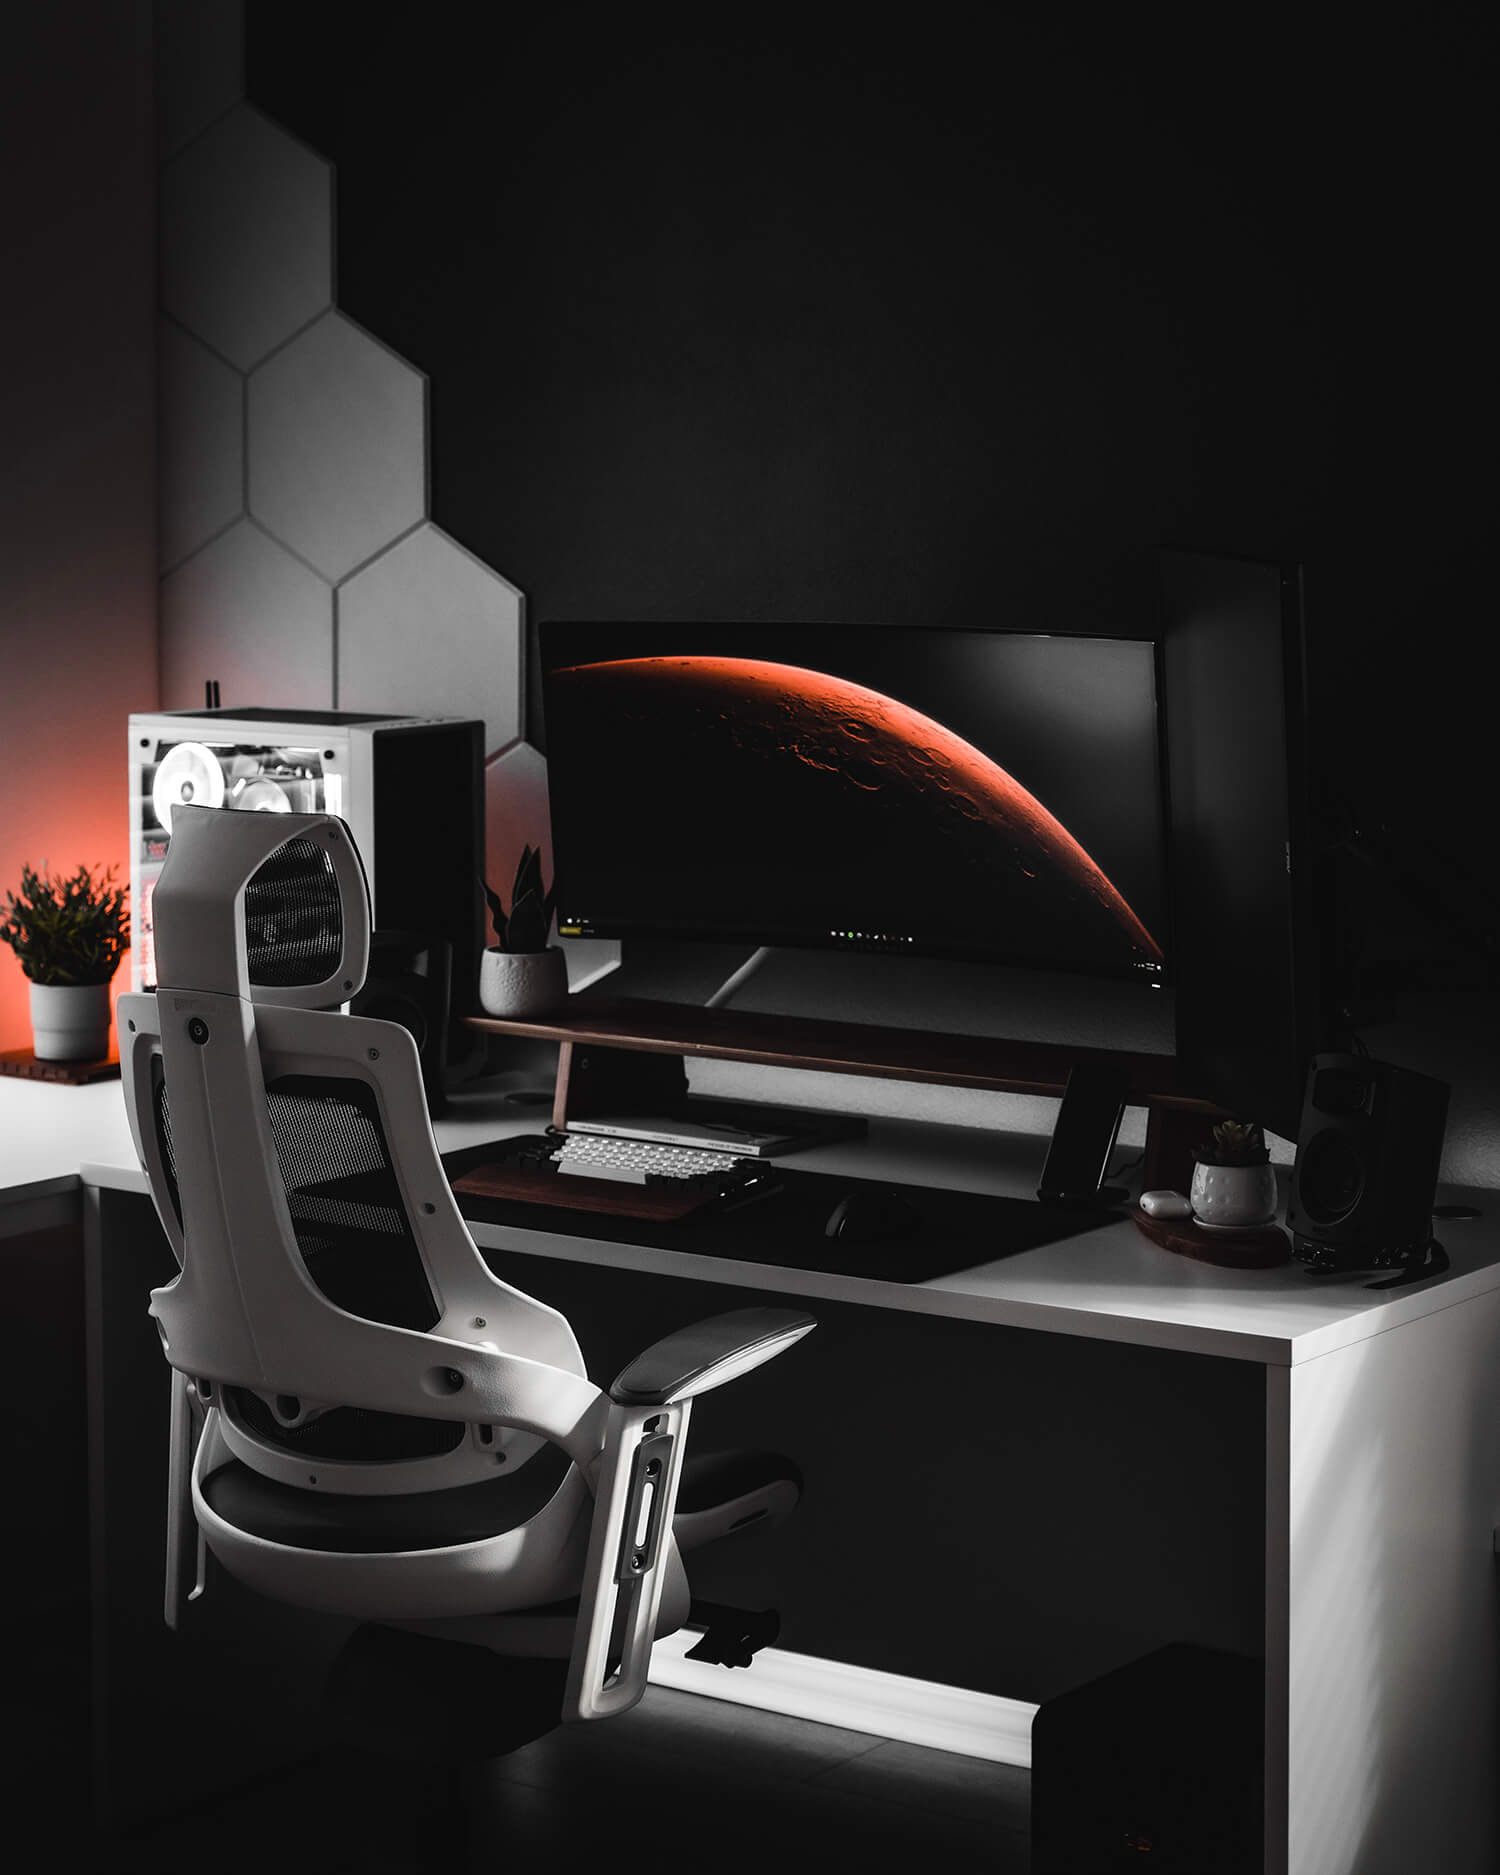 Futuristic setup featuring Mars desktop wallpaper